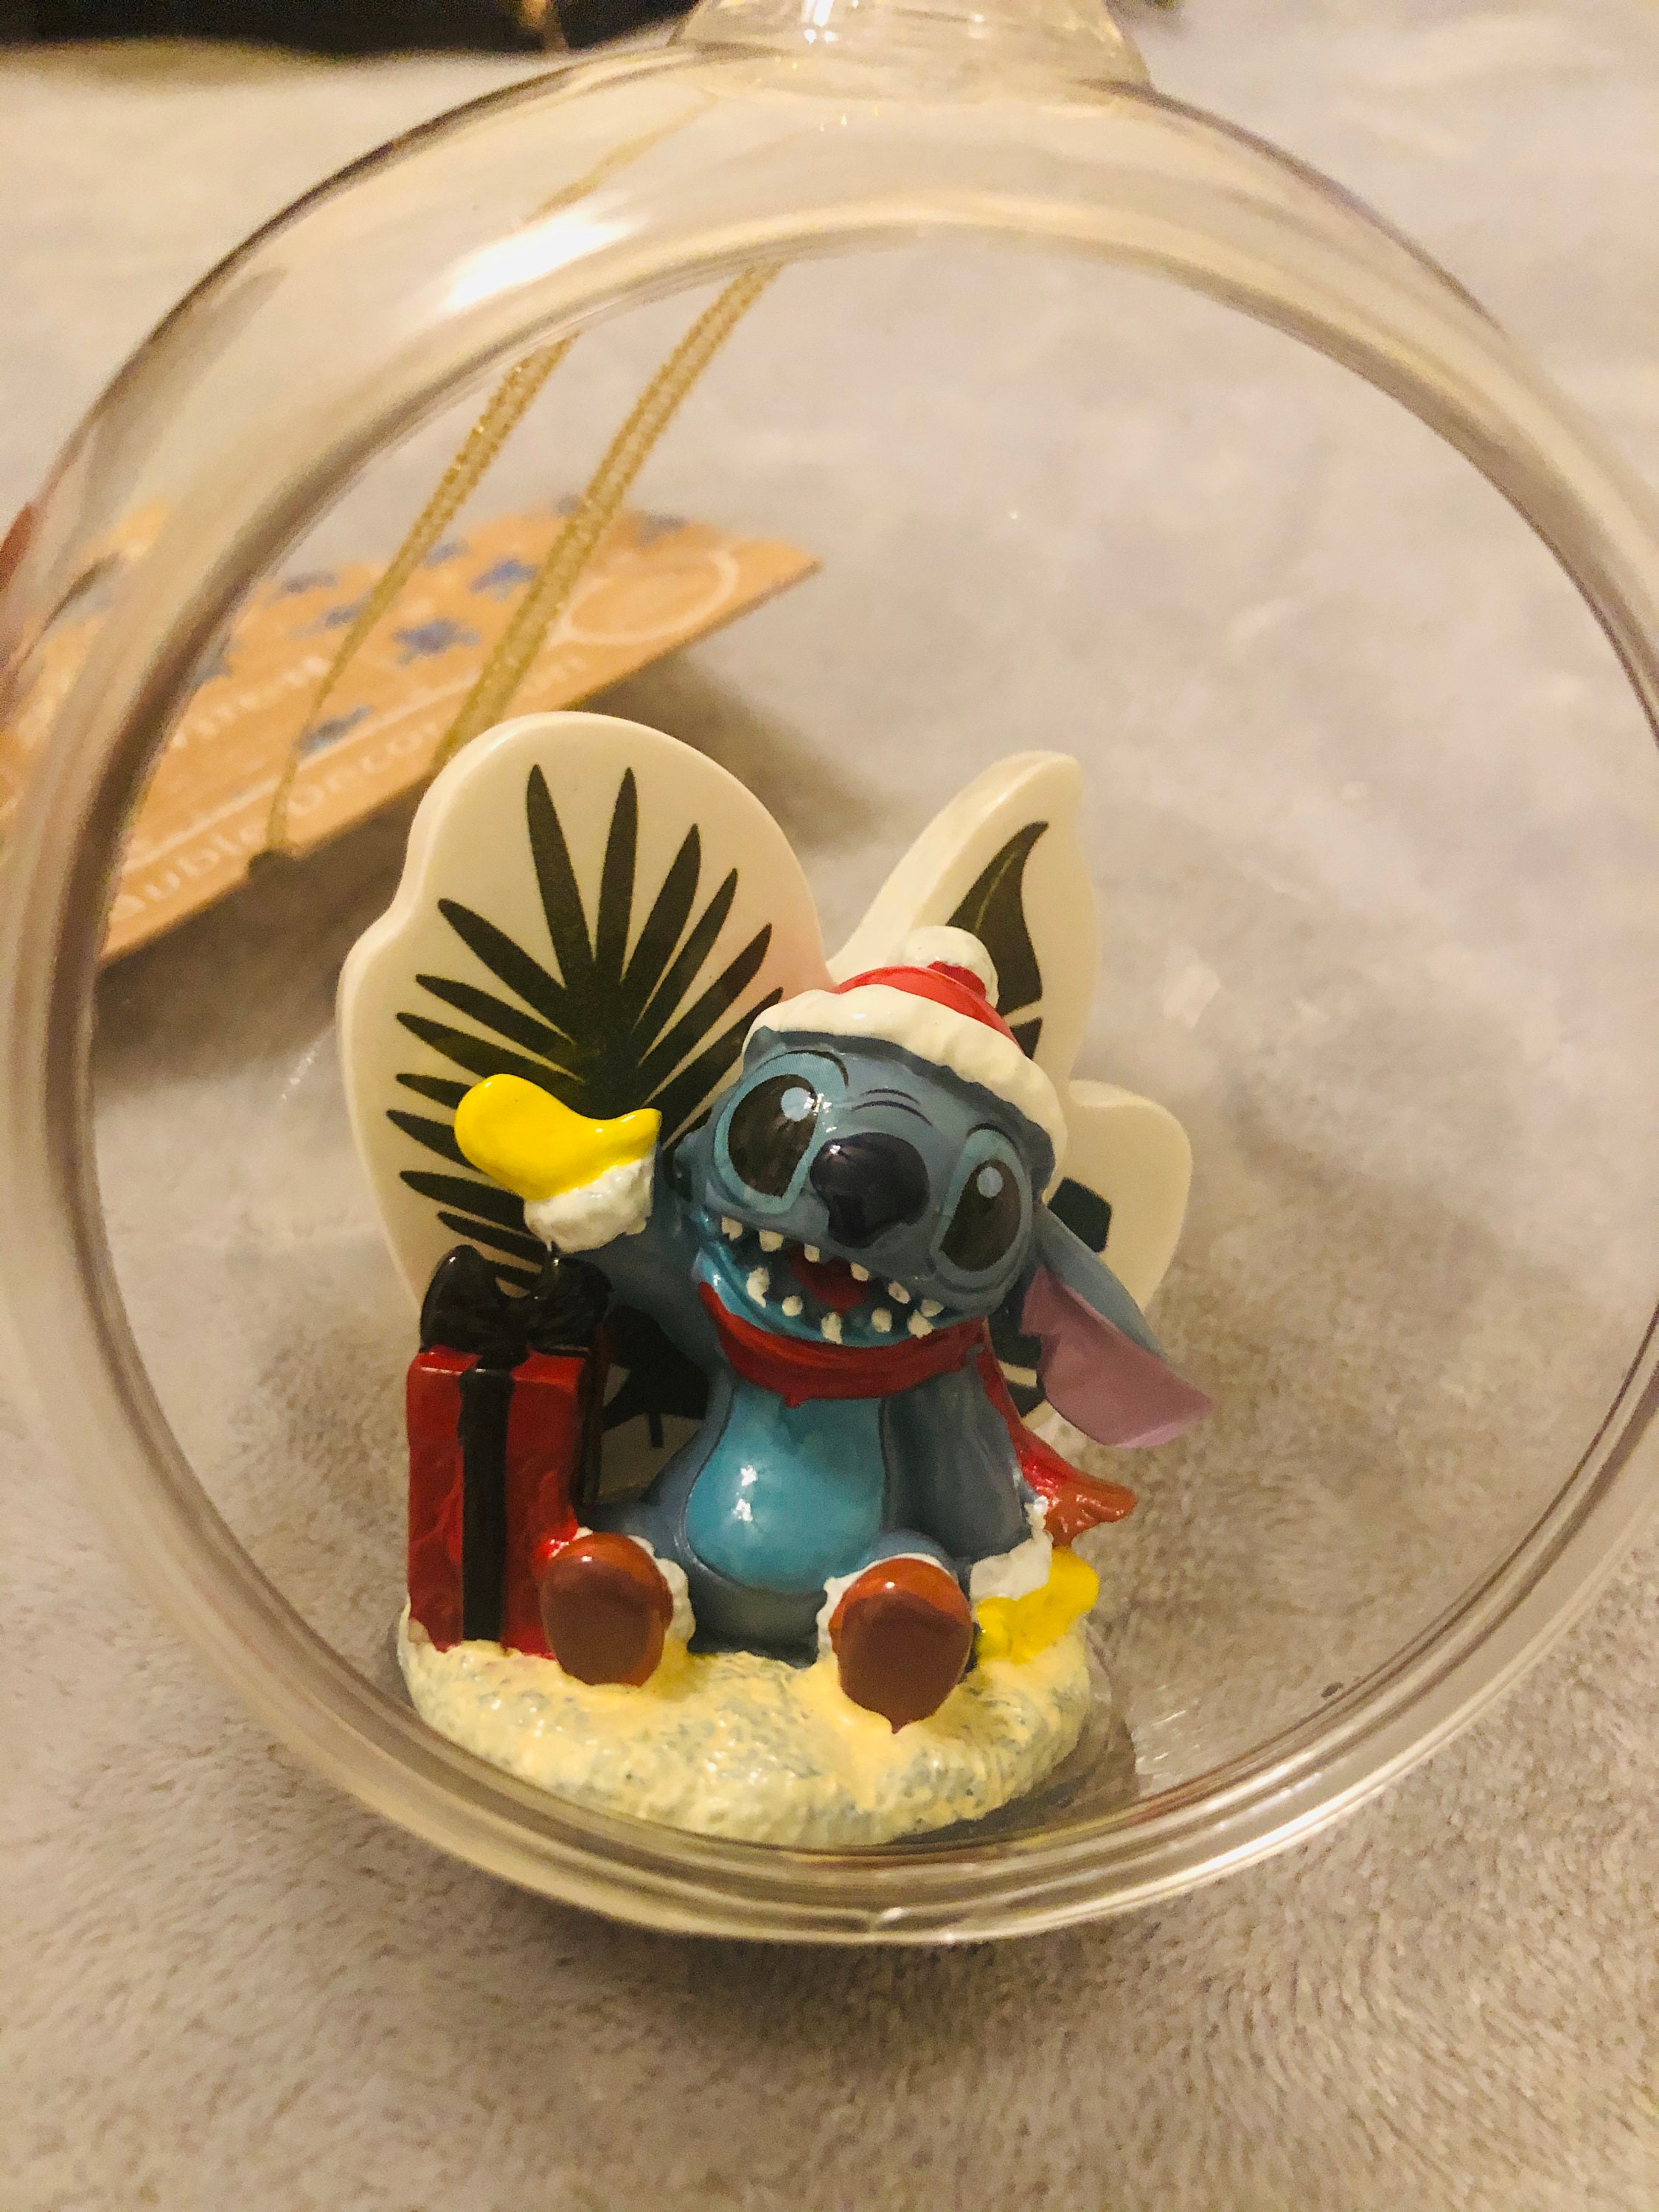 Disney's Lilo & Stitch Ornament Set of 6 